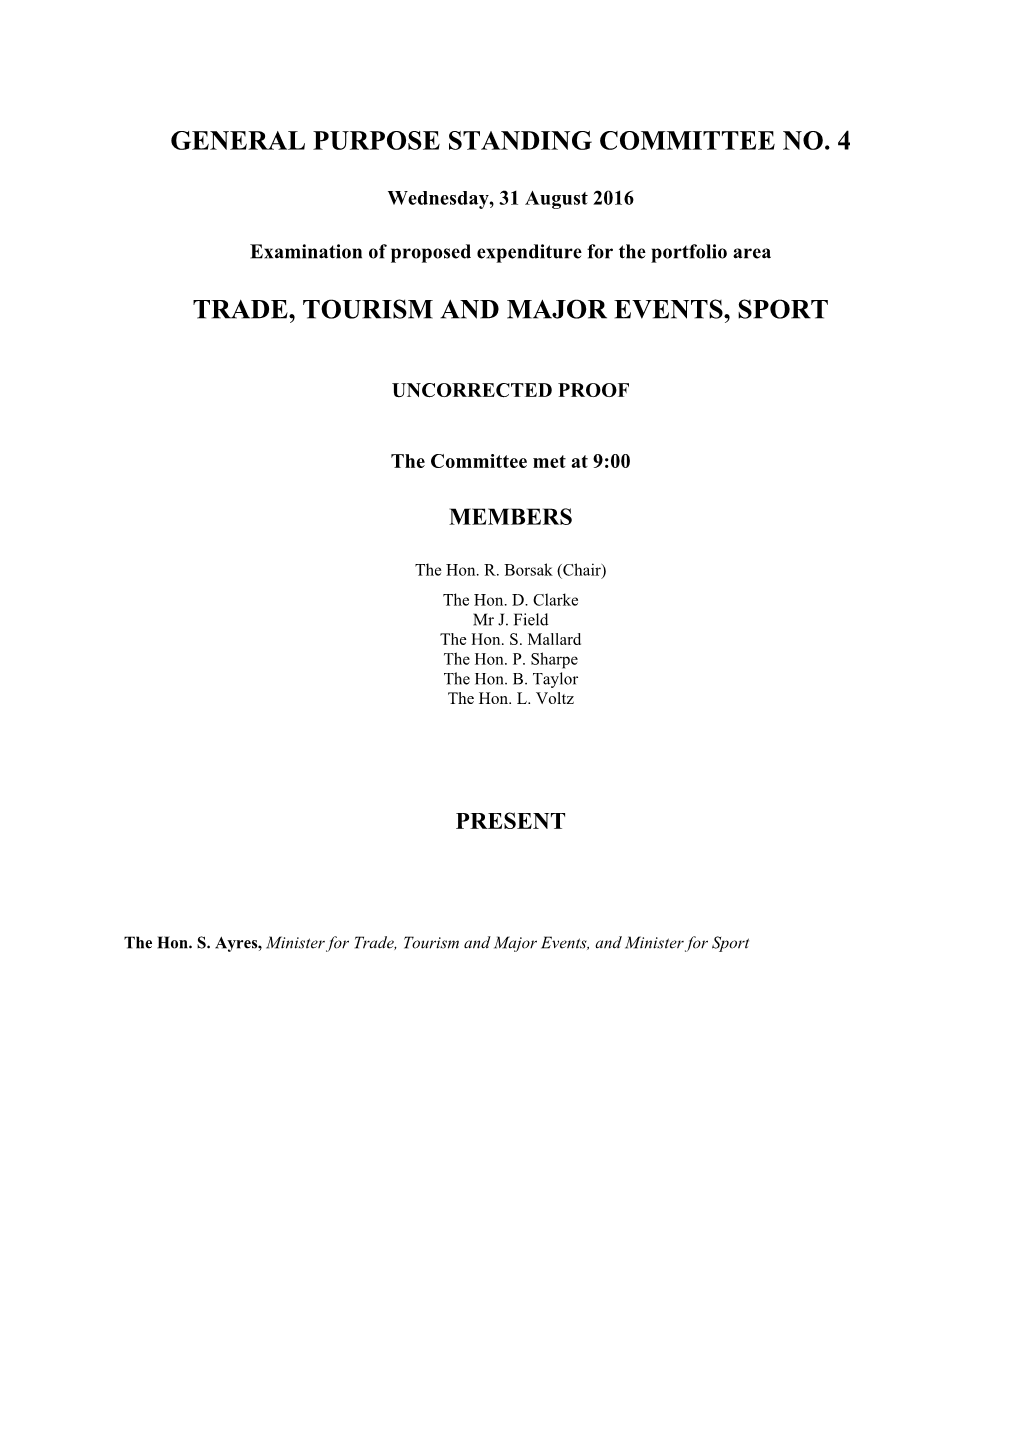 Trade, Tourism and Major Events, Sport